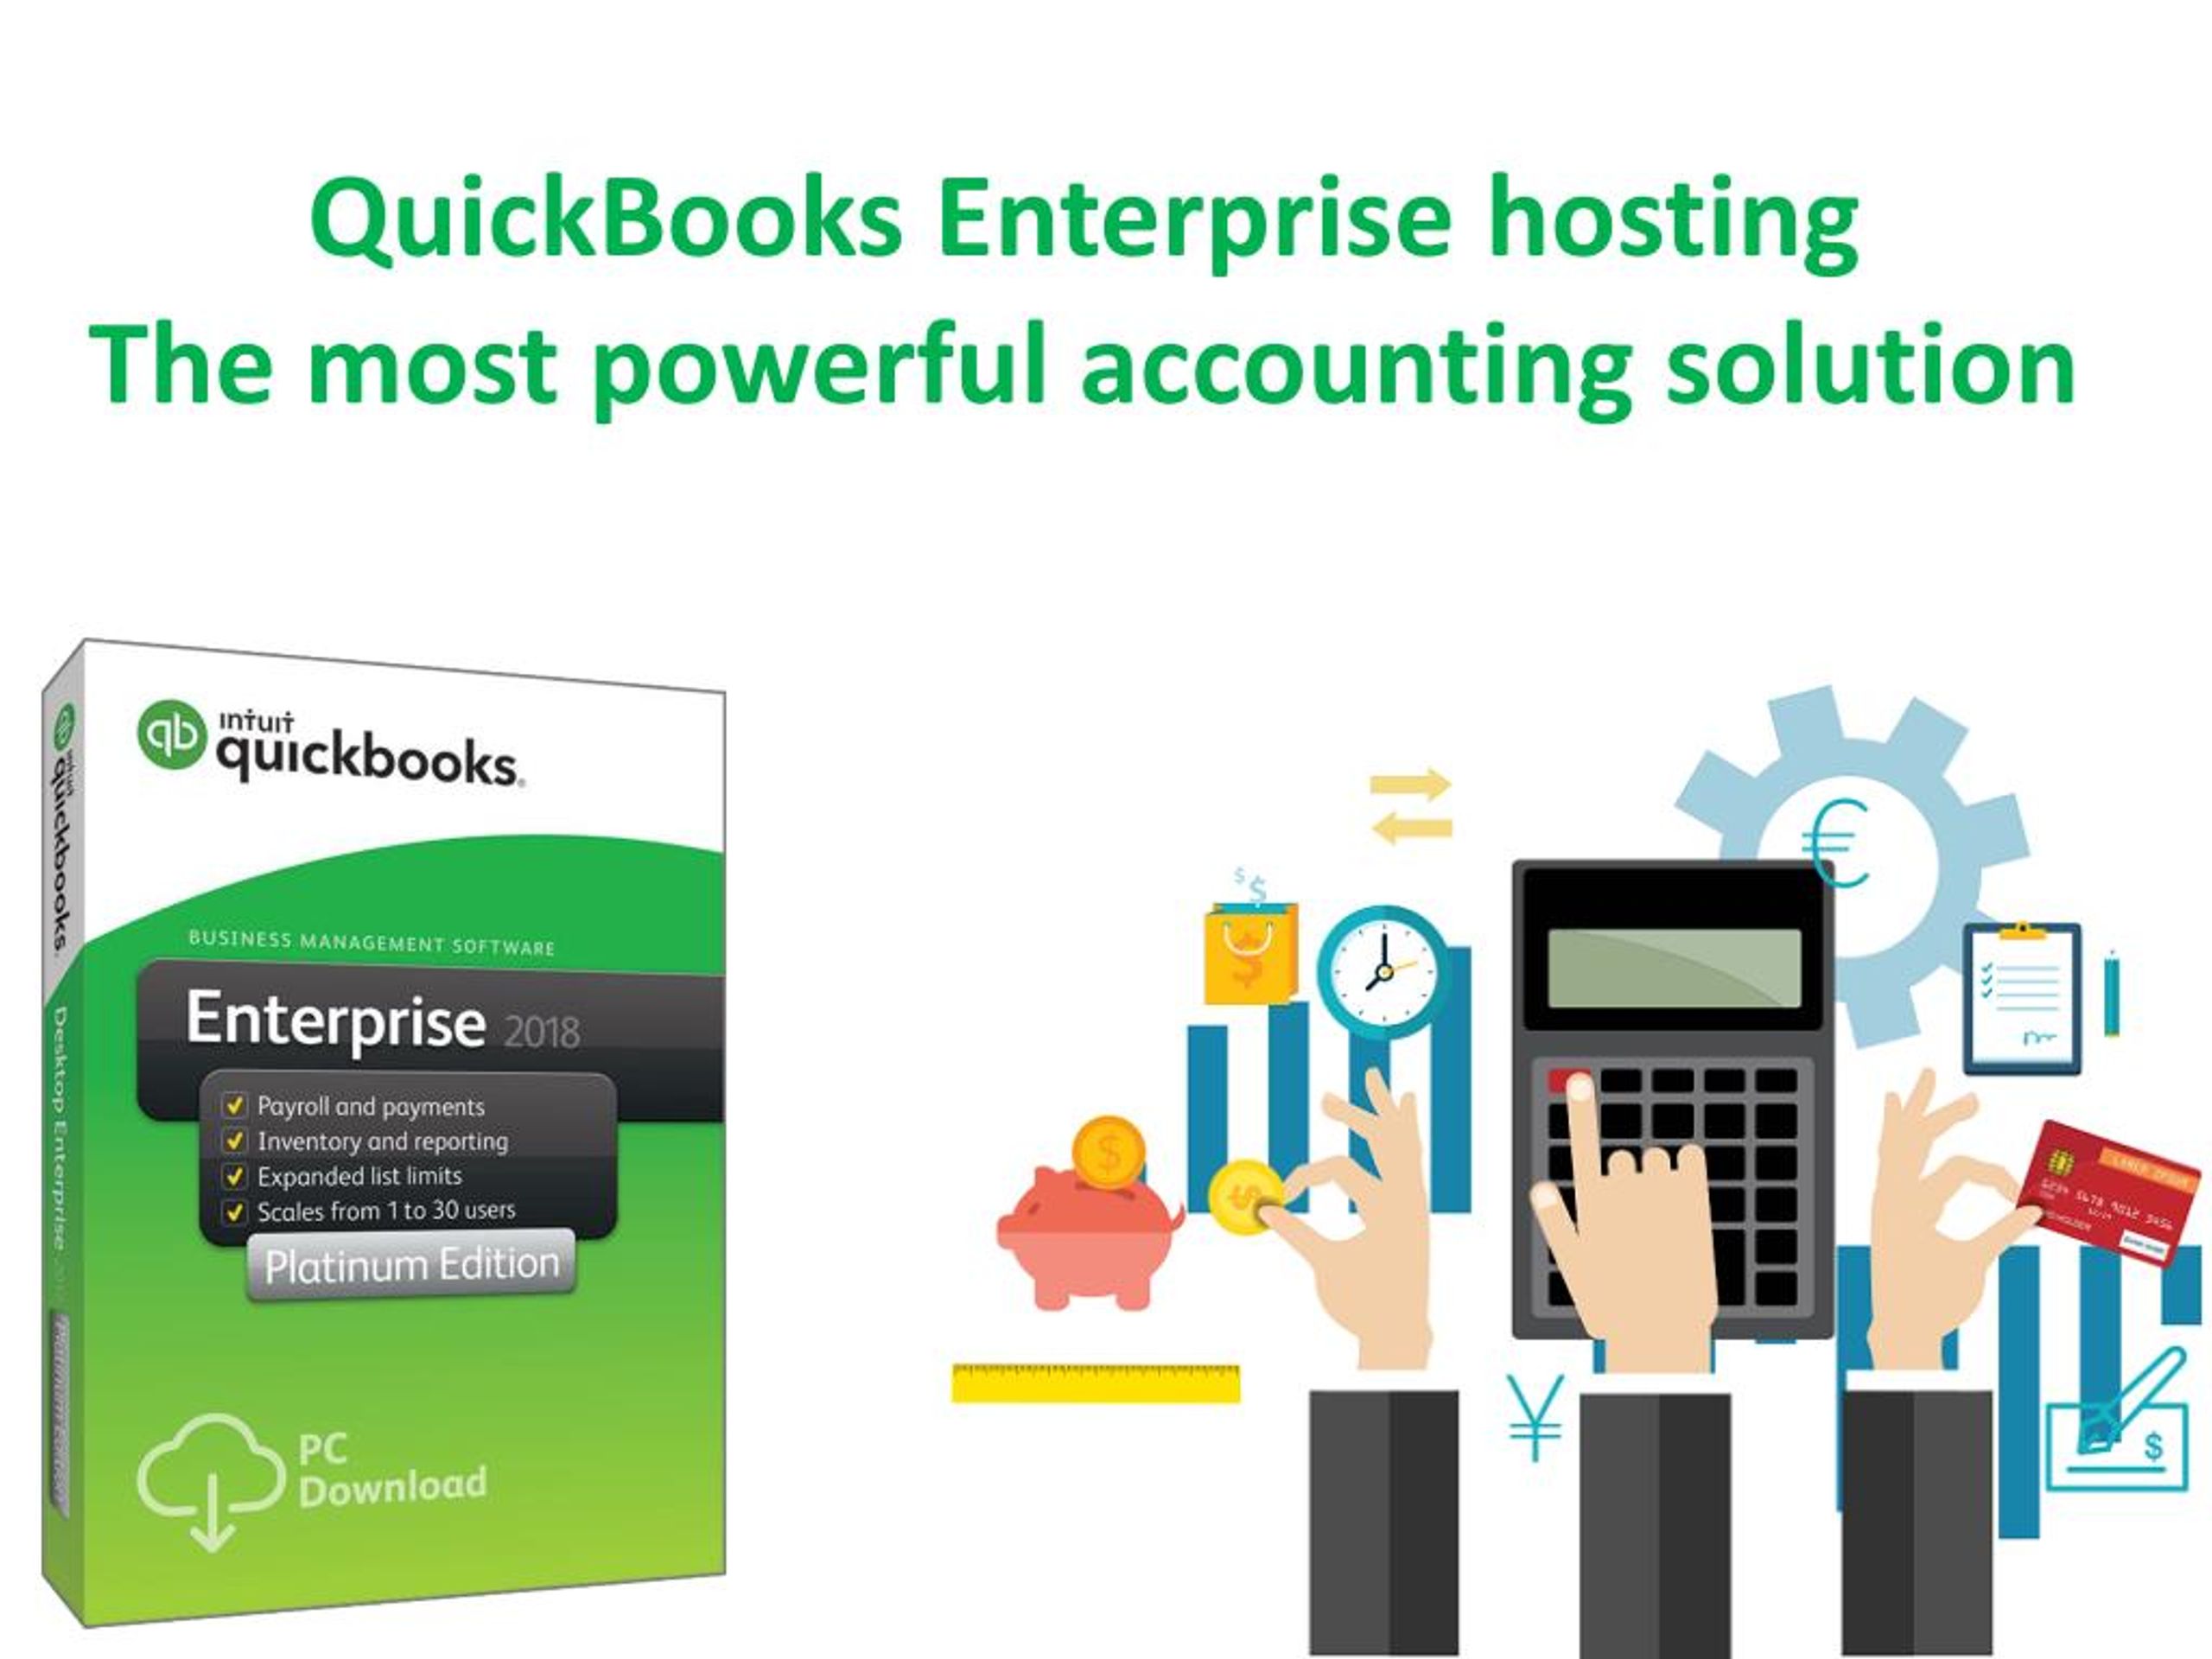 Ppt Quickbooks Enterprise Hosting Powerpoint Presentation Free Download Id 8000331